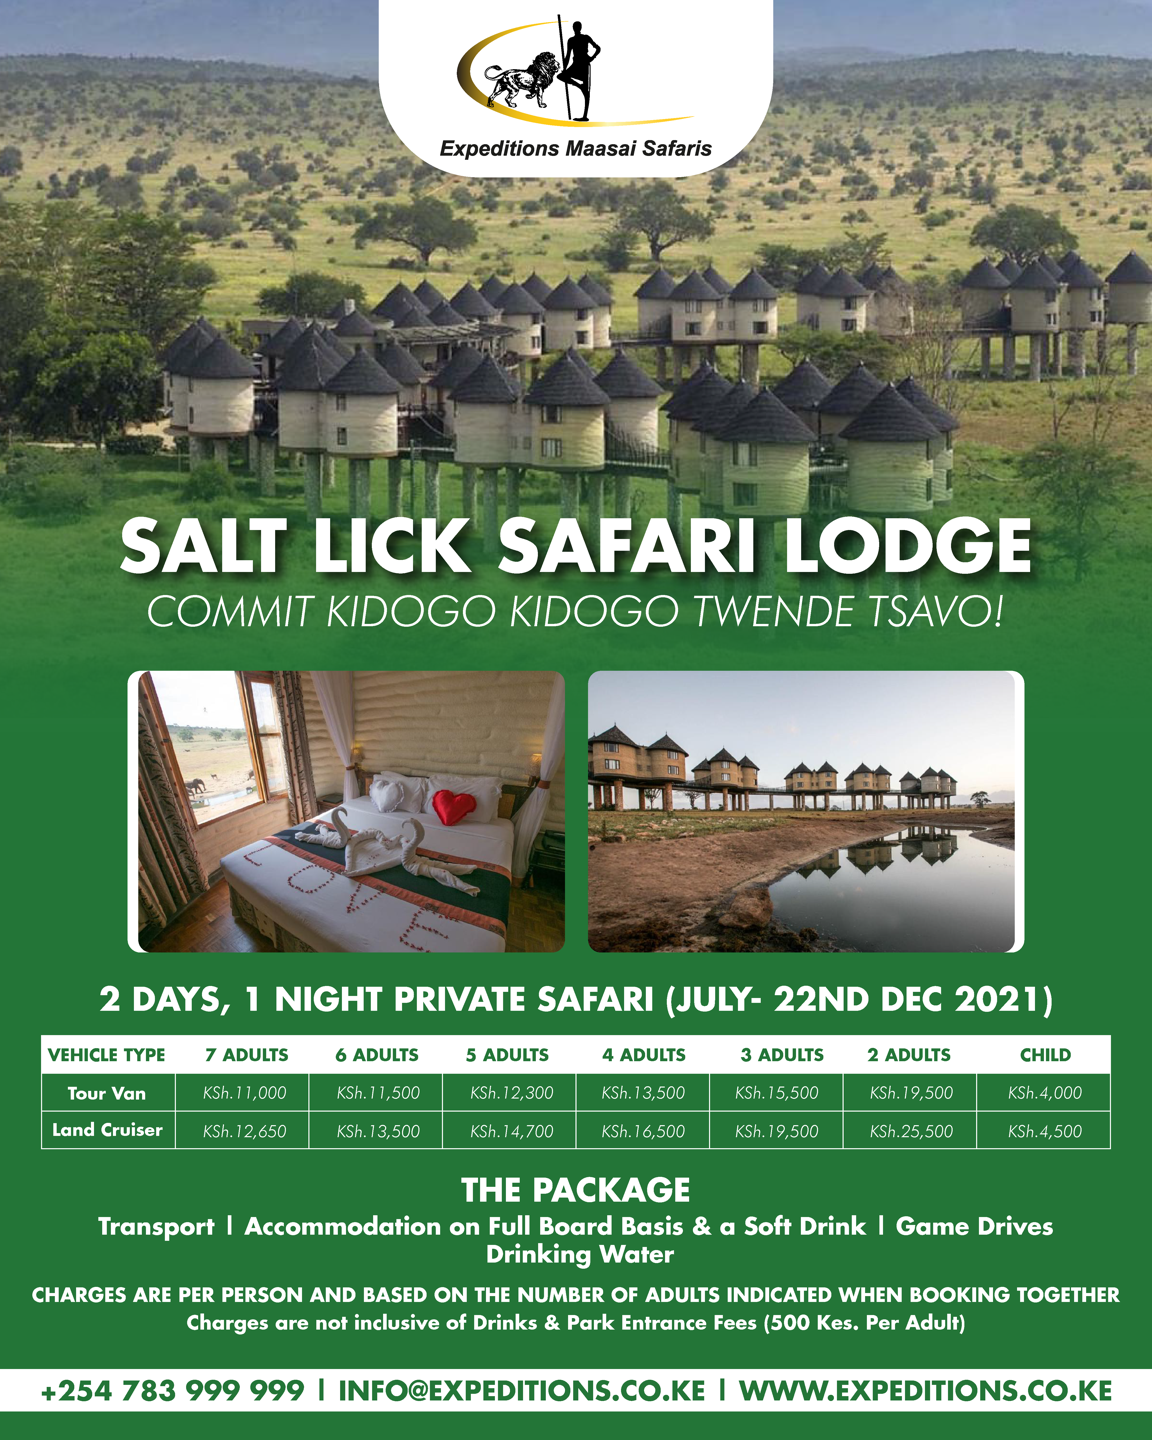 Enjoy world-class hospitality at the Salt Lick Safari Lodge with our 2 Days, 1 Night safari